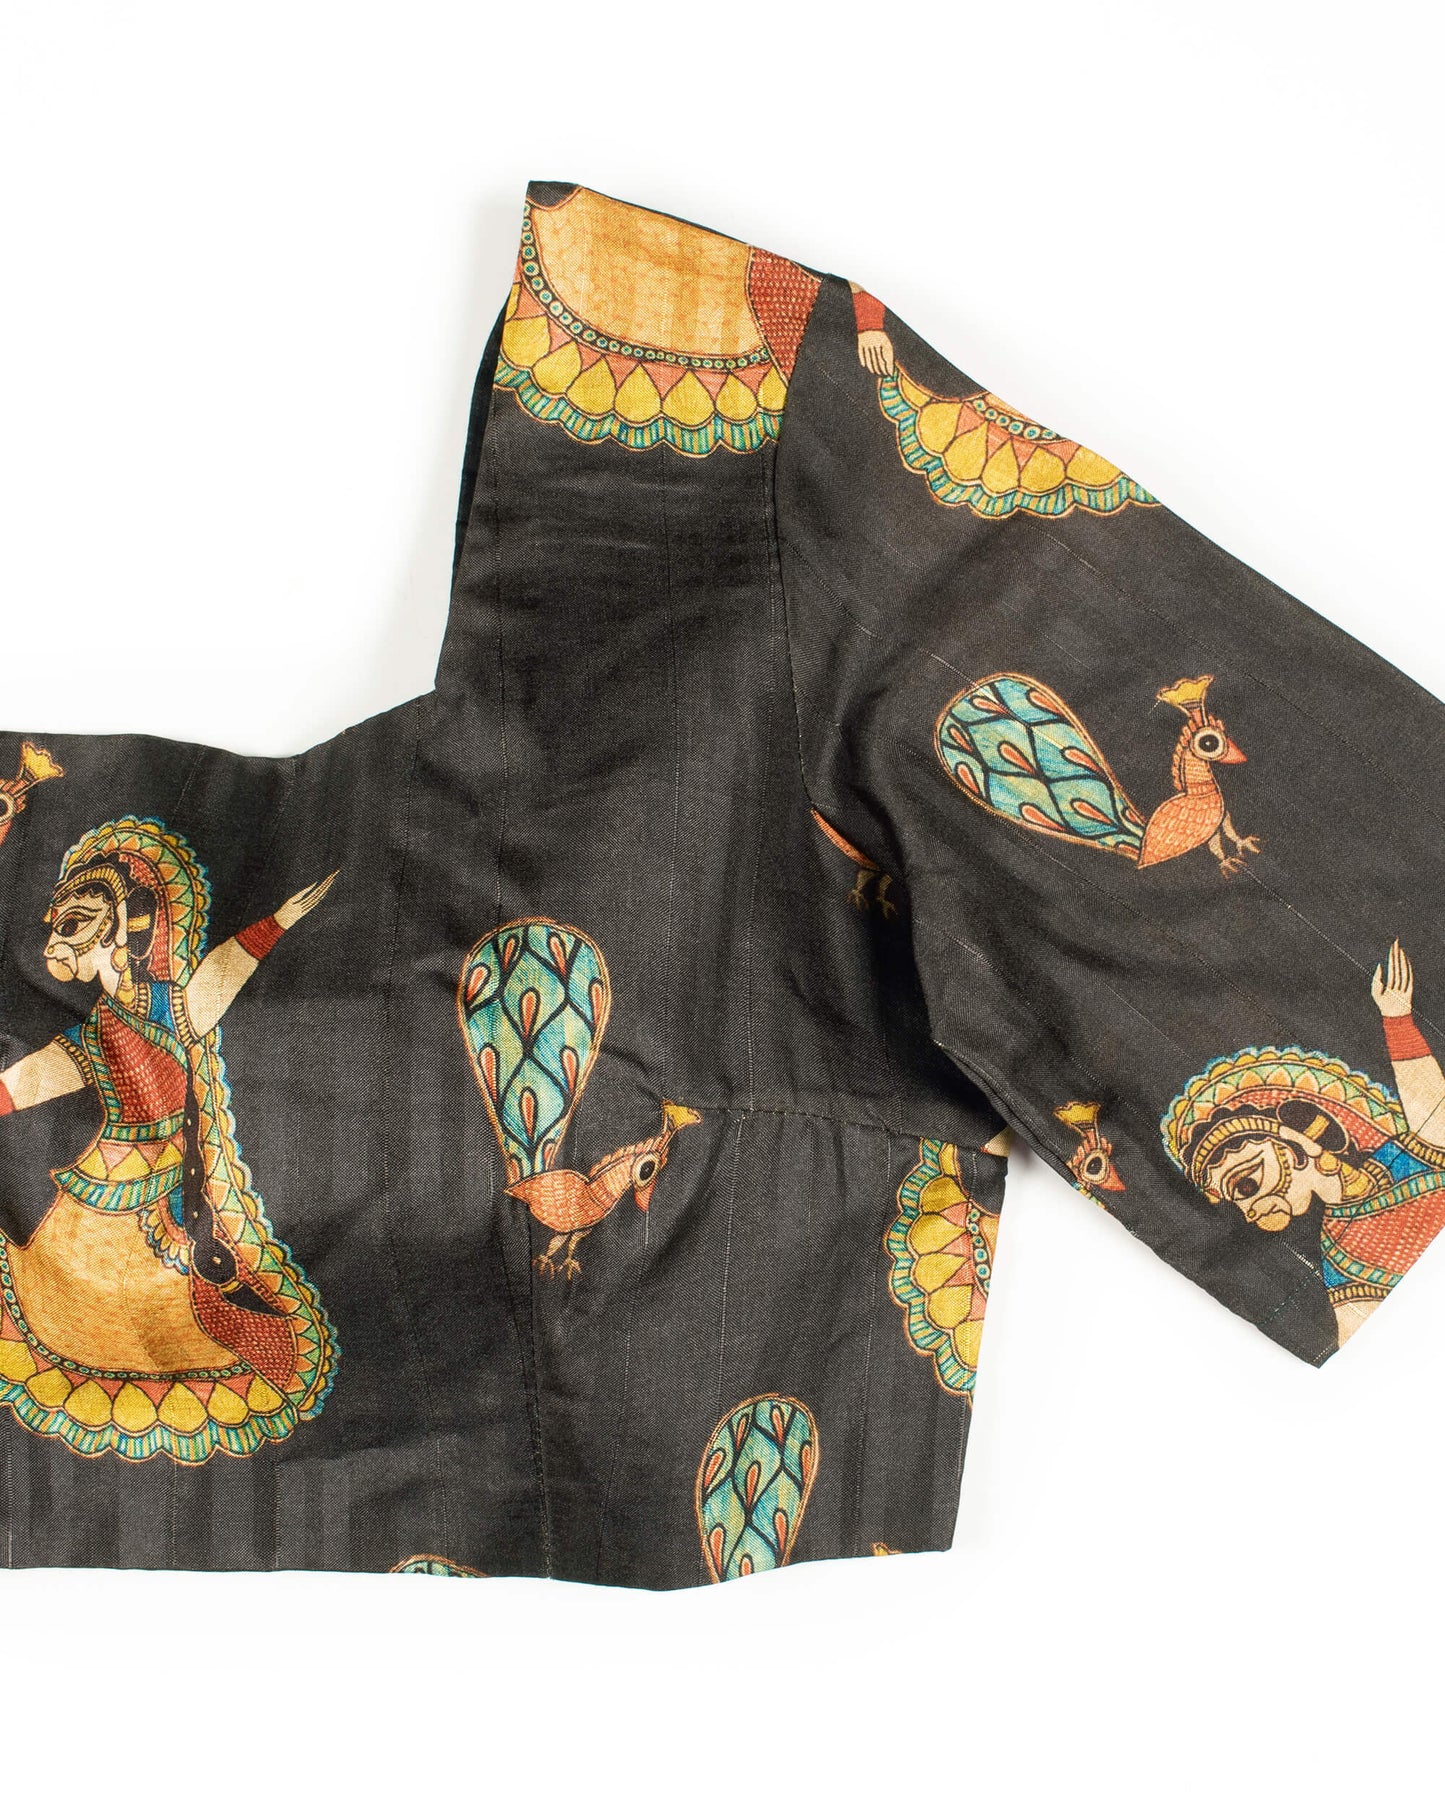 Madhubani Printed Silk Blouse